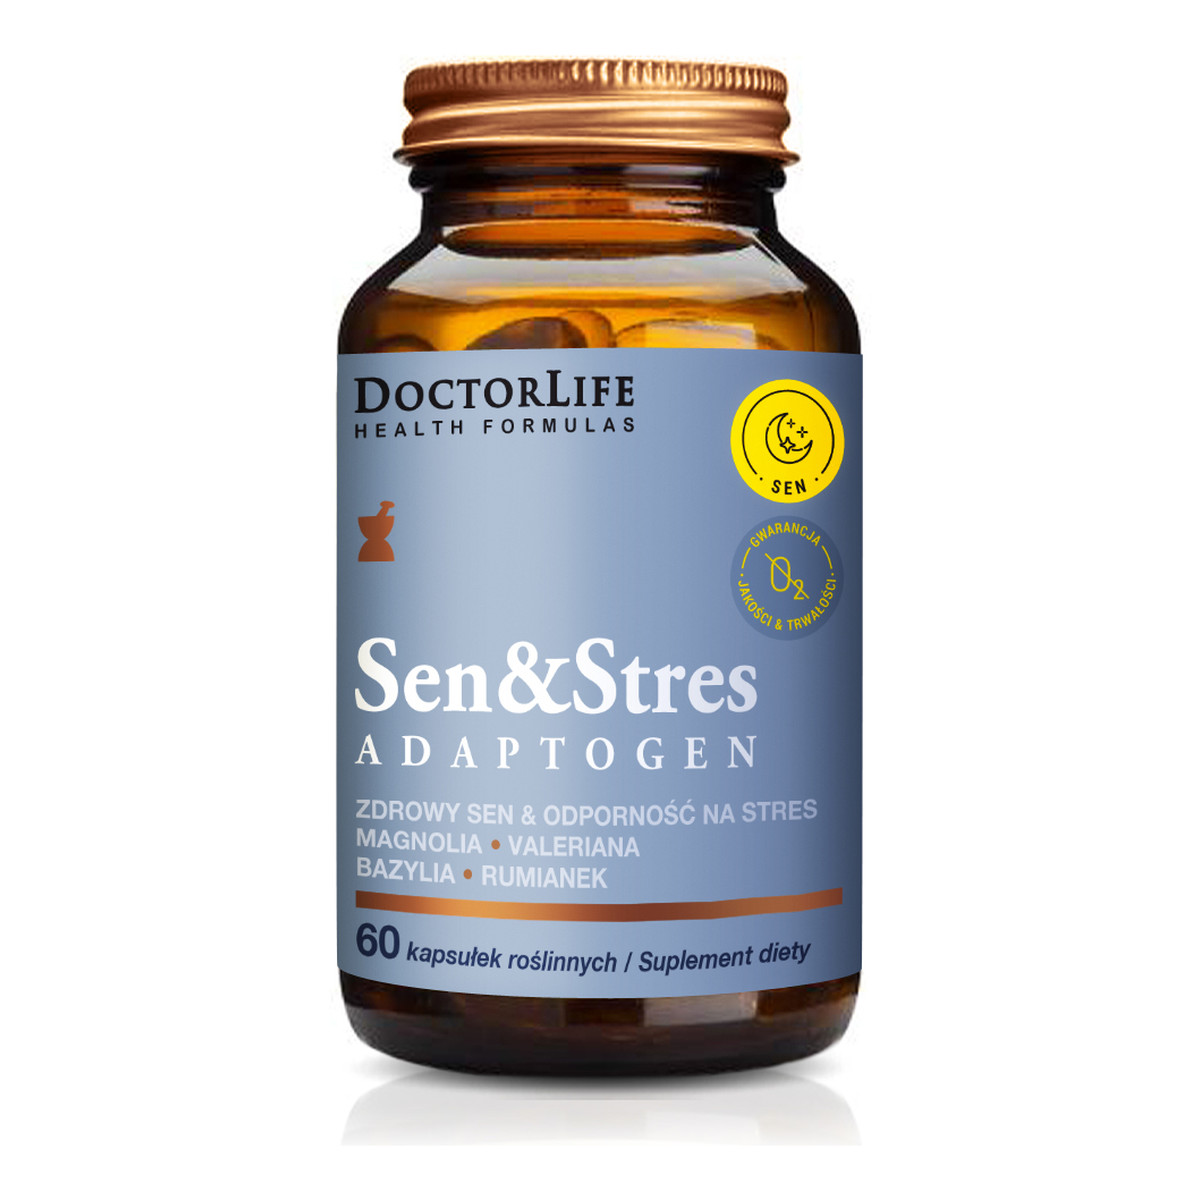 Doctor Life Sen & stres adaptogen suplement diety wspomagający sen 60 kapsułek